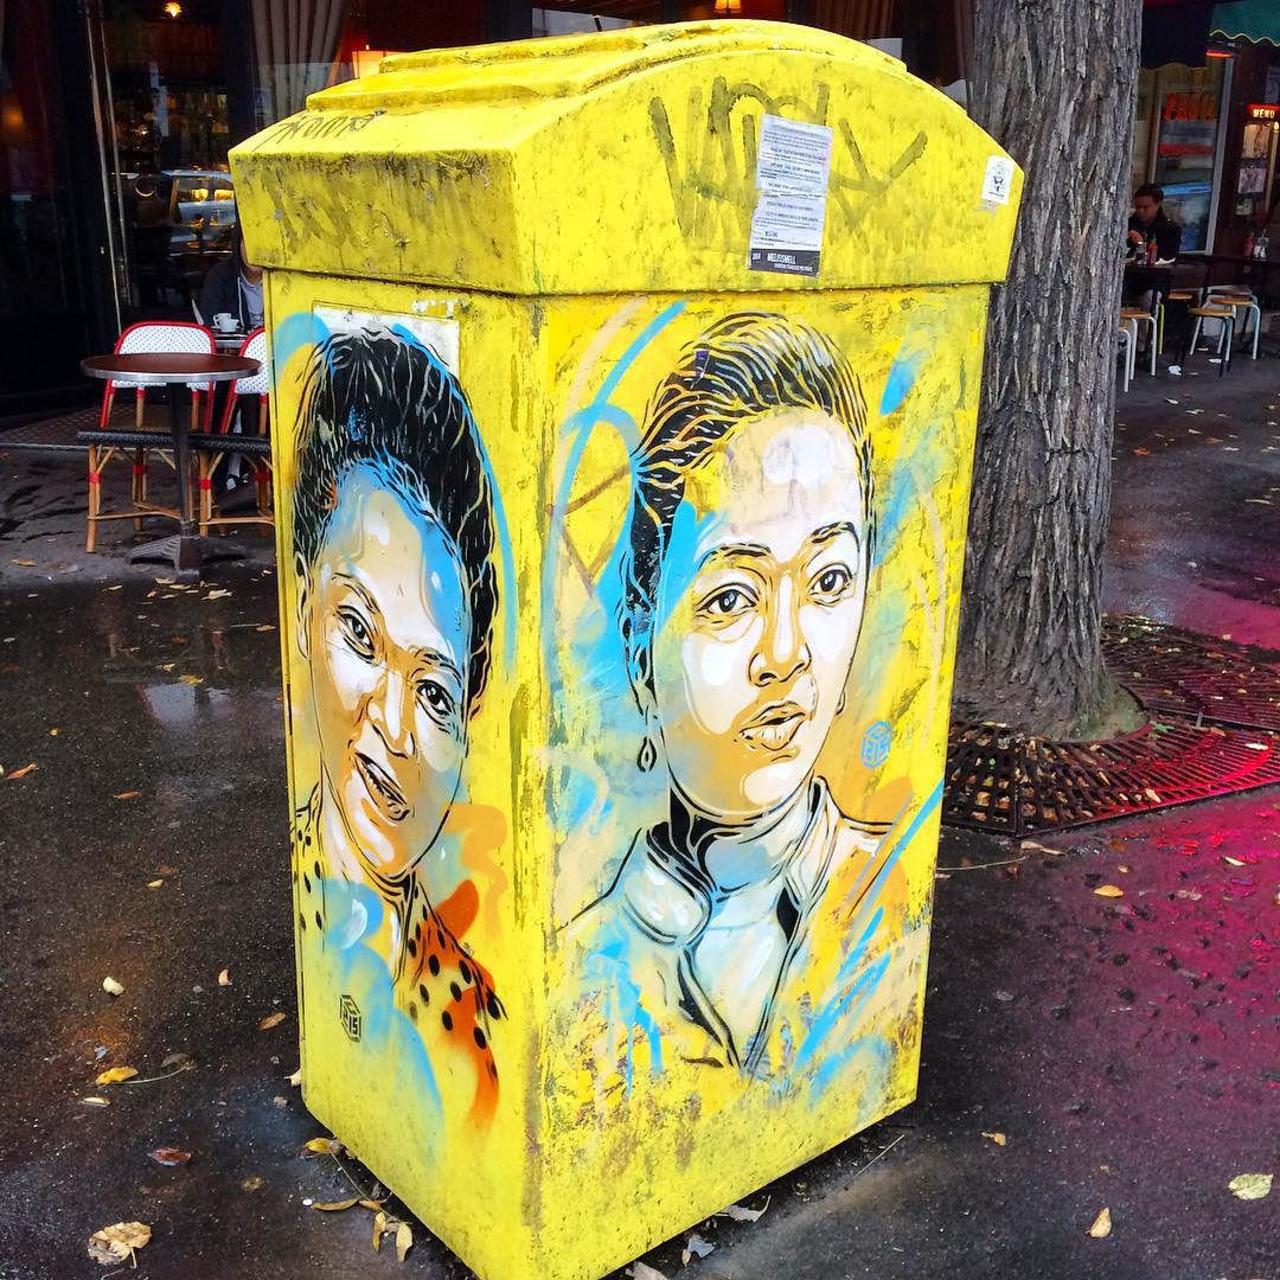 #Paris #graffiti photo by @benapix http://ift.tt/1LUXKhX #StreetArt http://t.co/KM4m2eUZhP